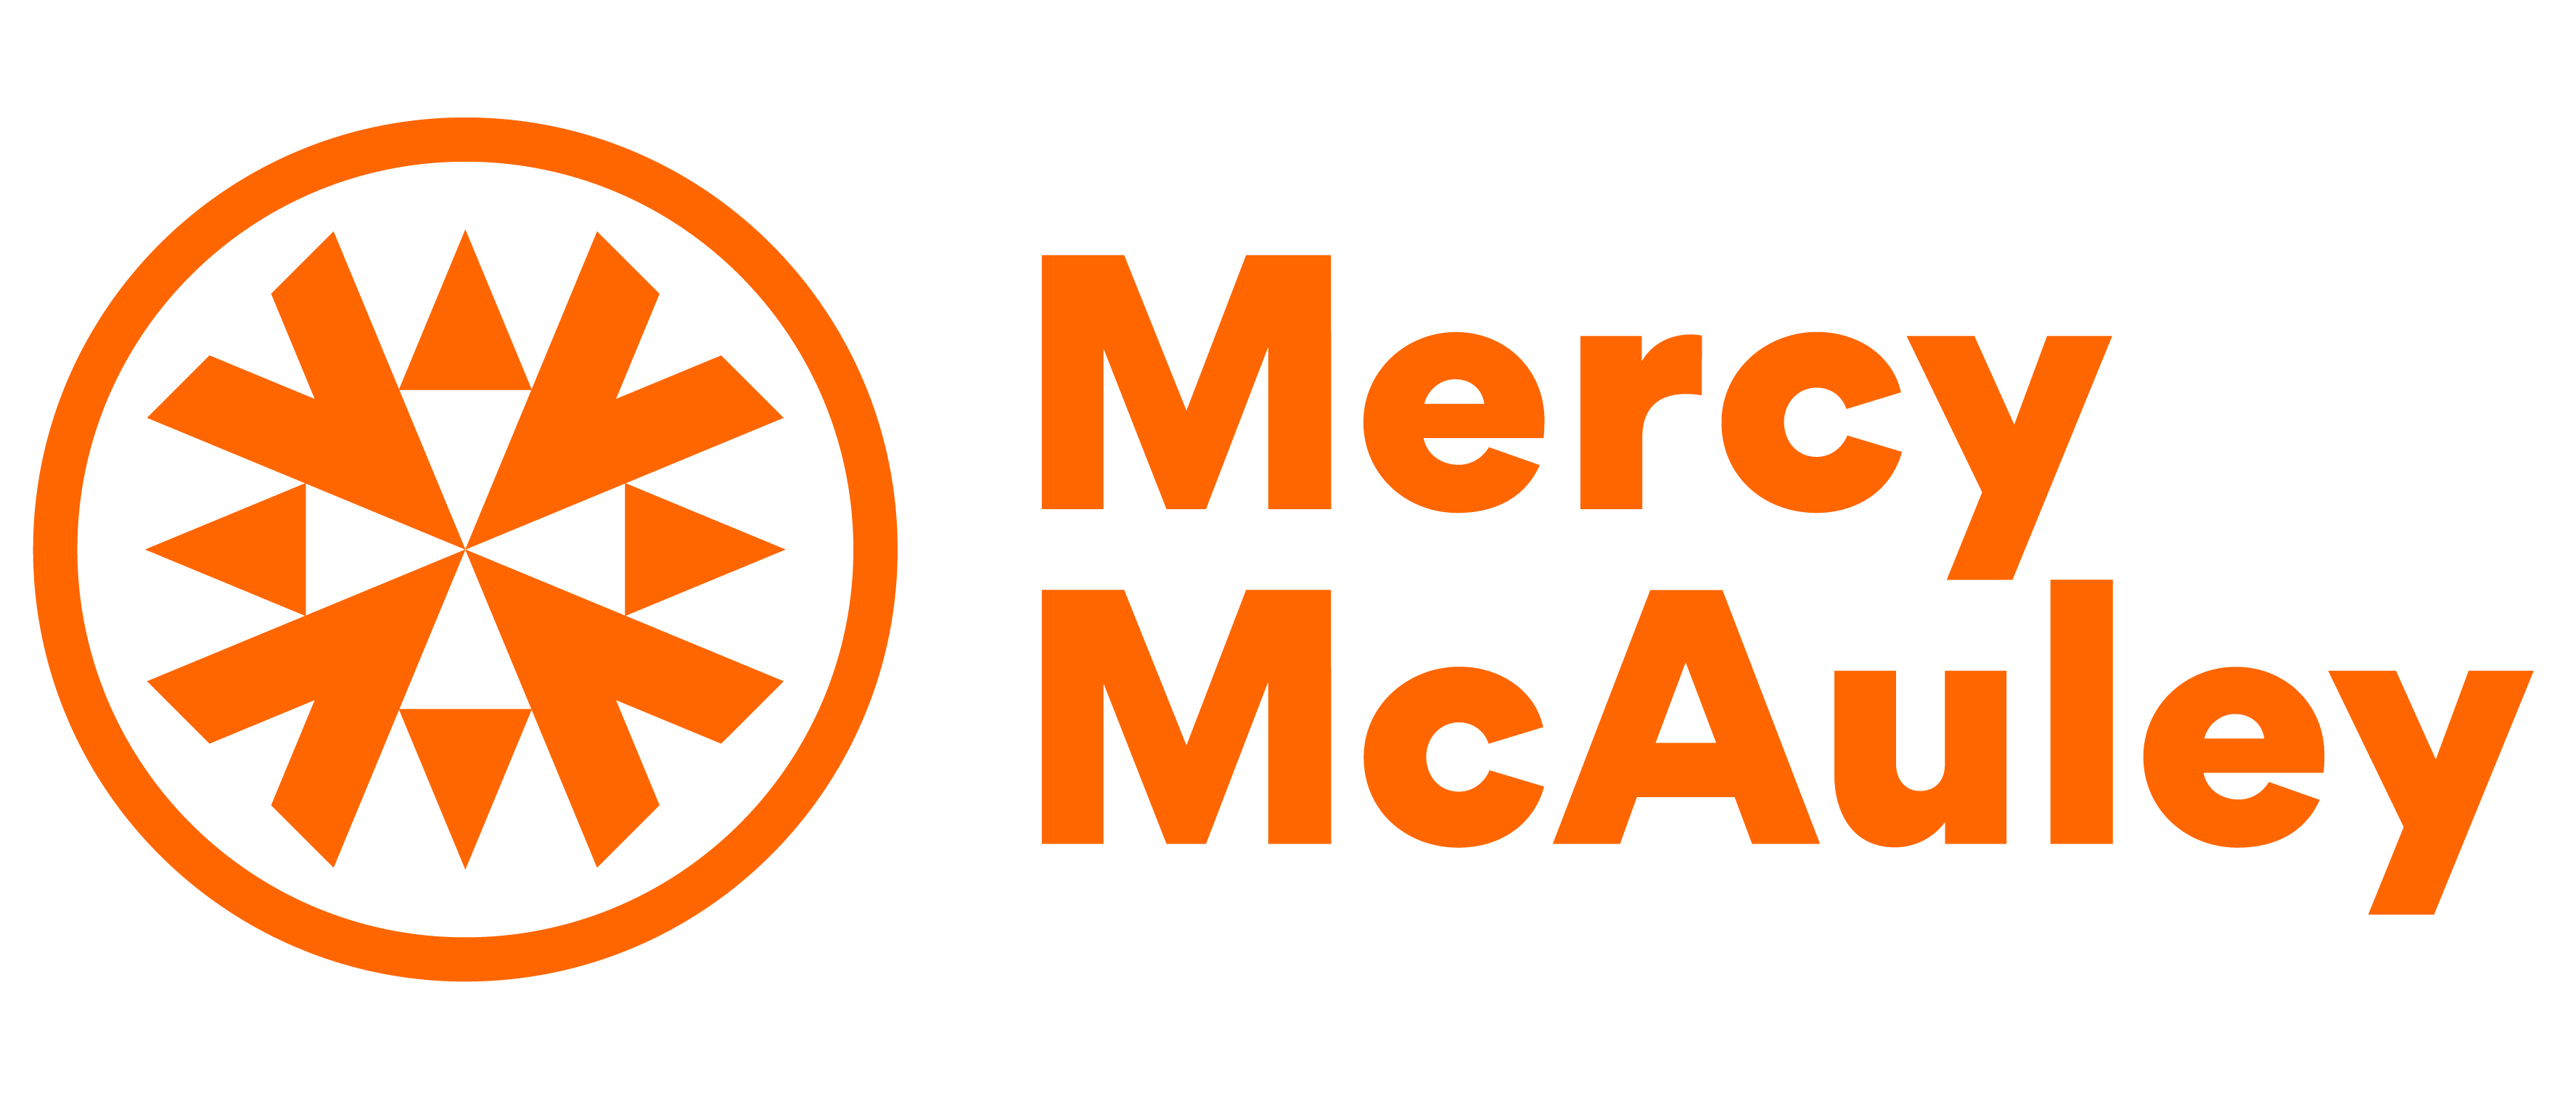 Mercymcauley PMS Fullcolor